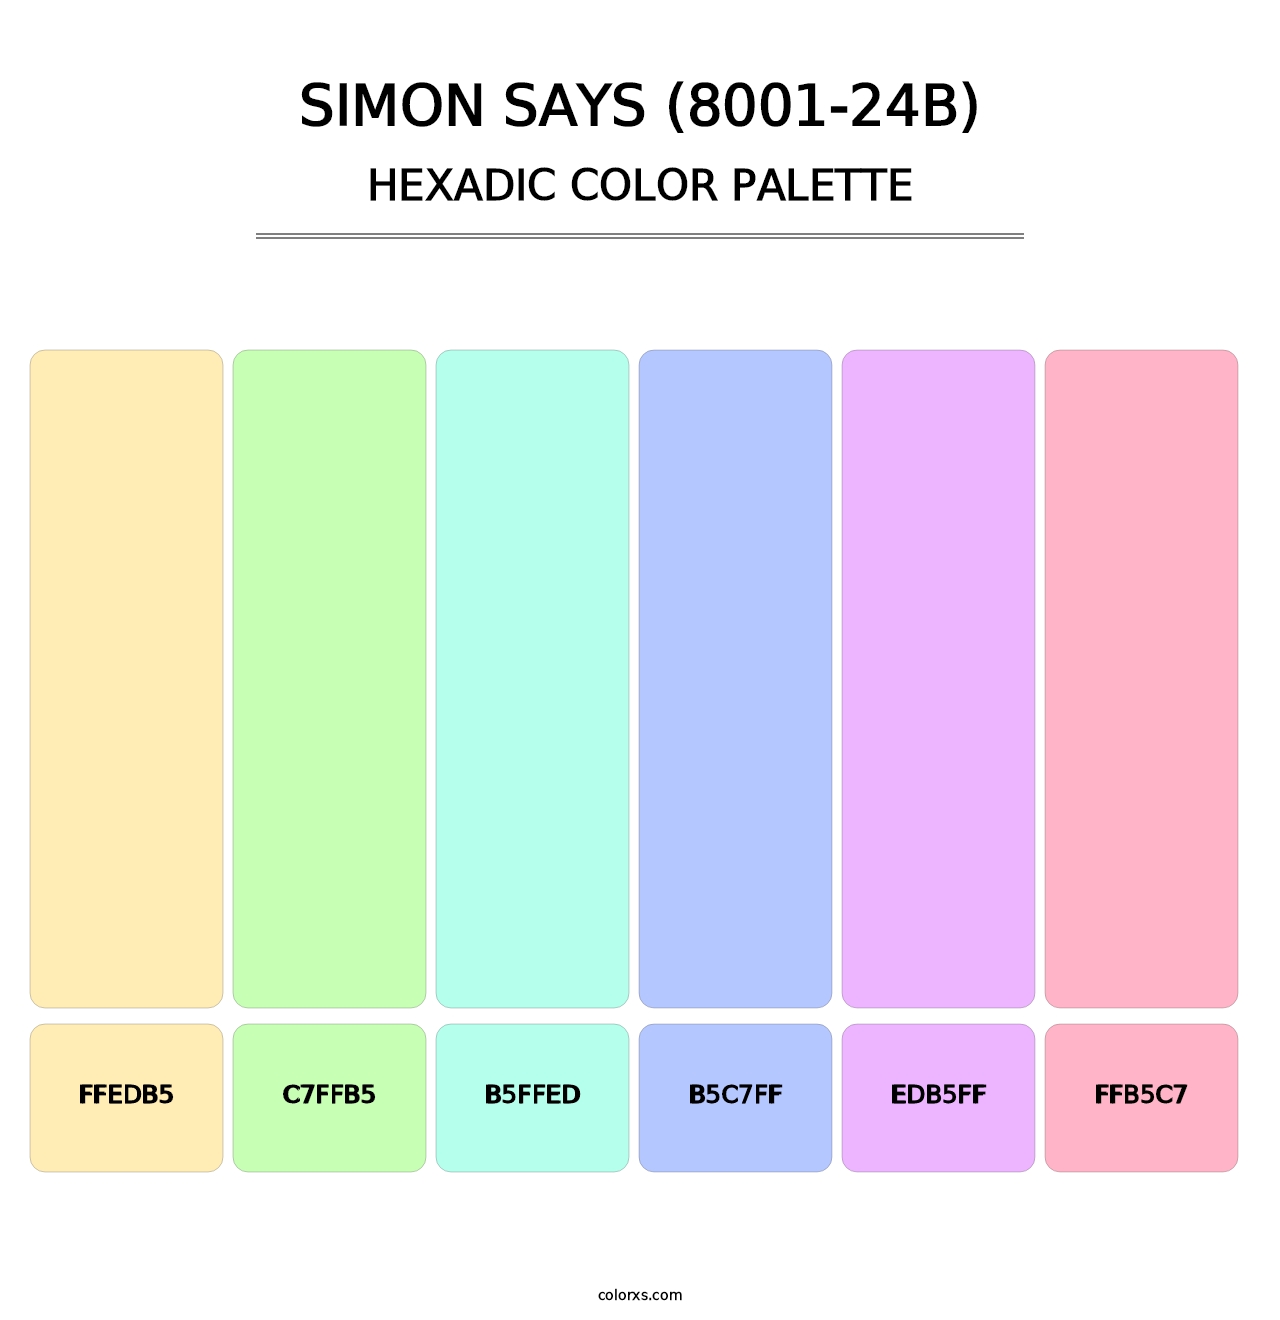 Simon Says (8001-24B) - Hexadic Color Palette